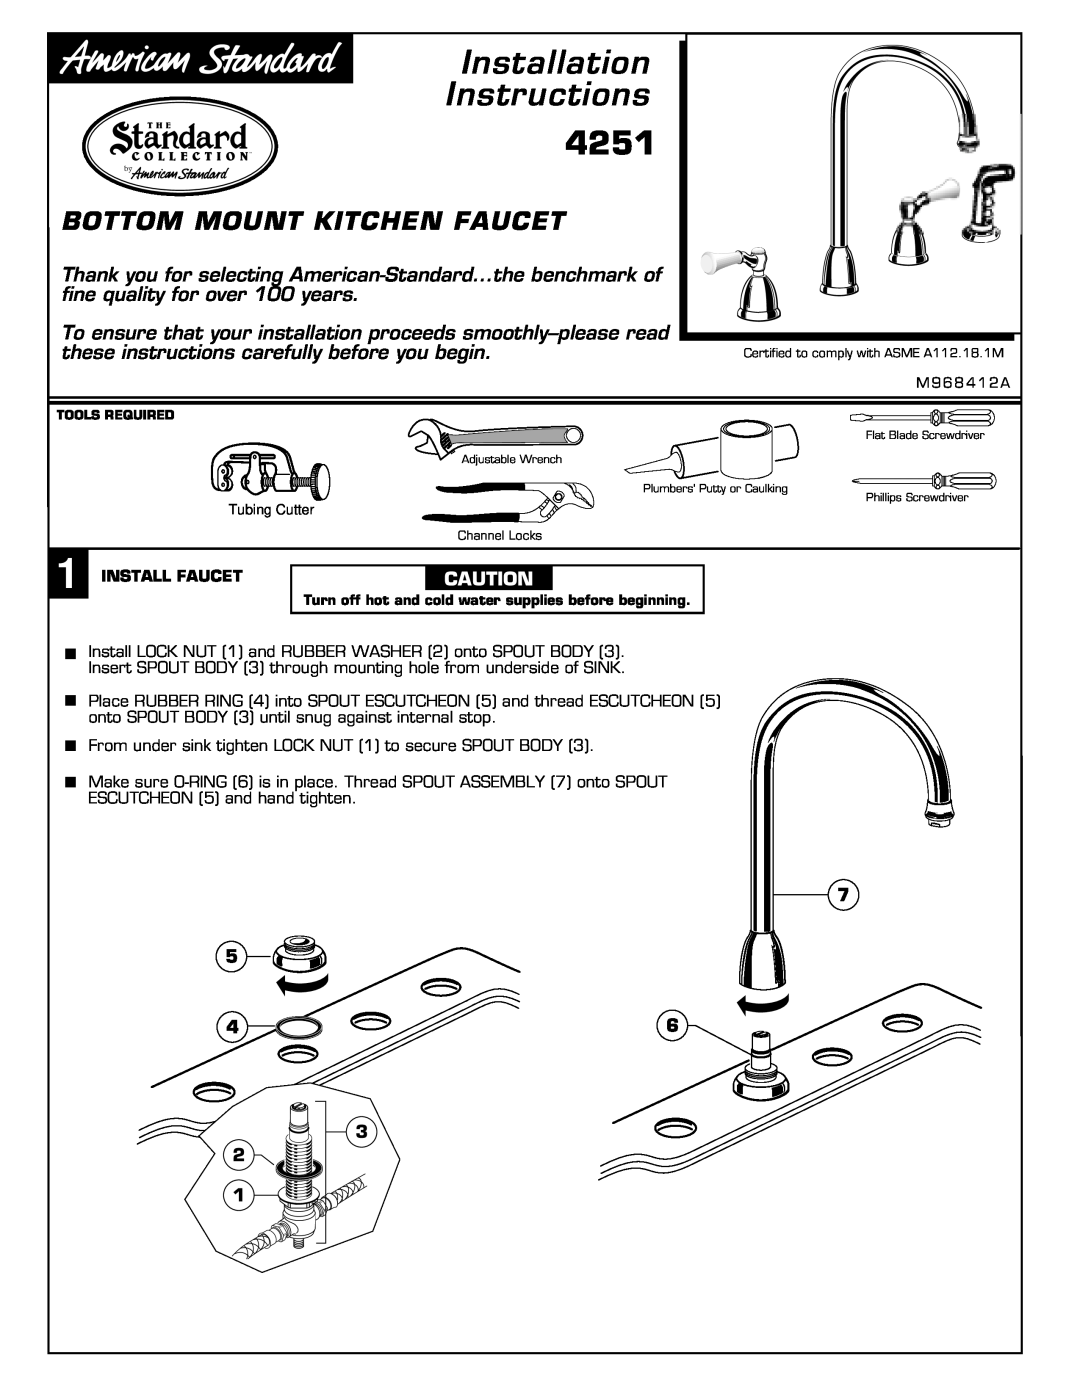 American Standard 4251, M968412A installation instructions Bottom Mount Kitchen Faucet, Installation Instructions 